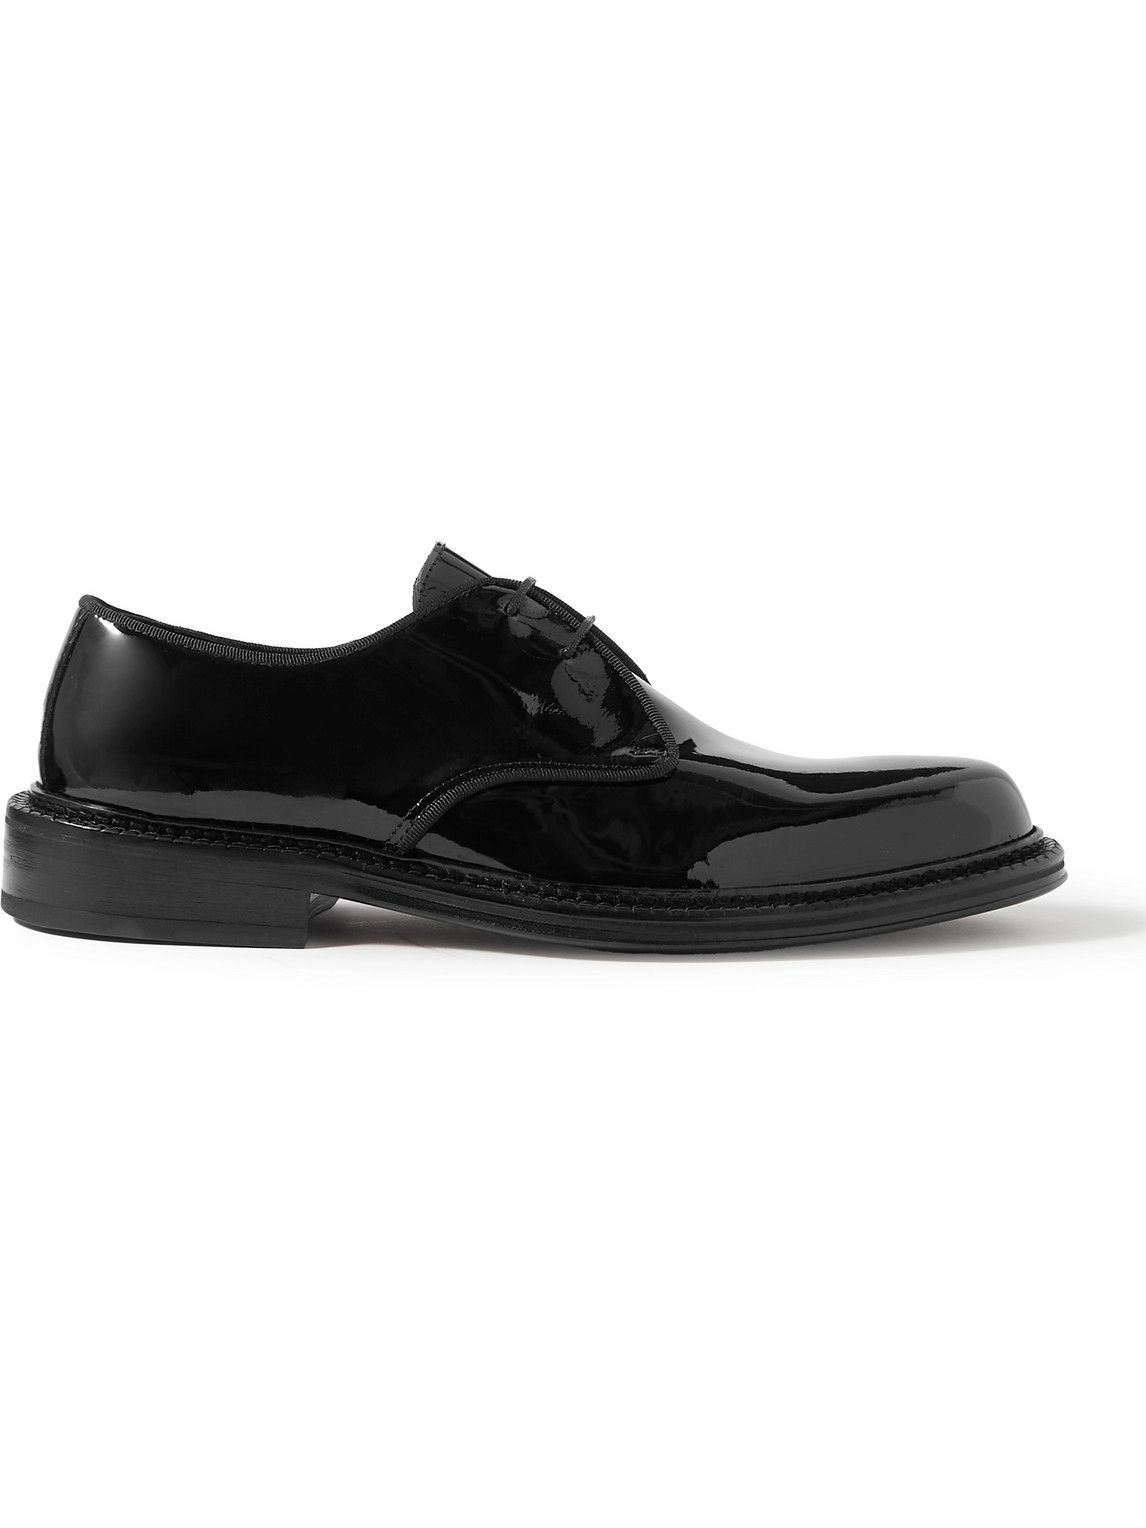 Photo: Mr P. - Grosgrain-Trimmed Patent-Leather Derby Shoes - Black